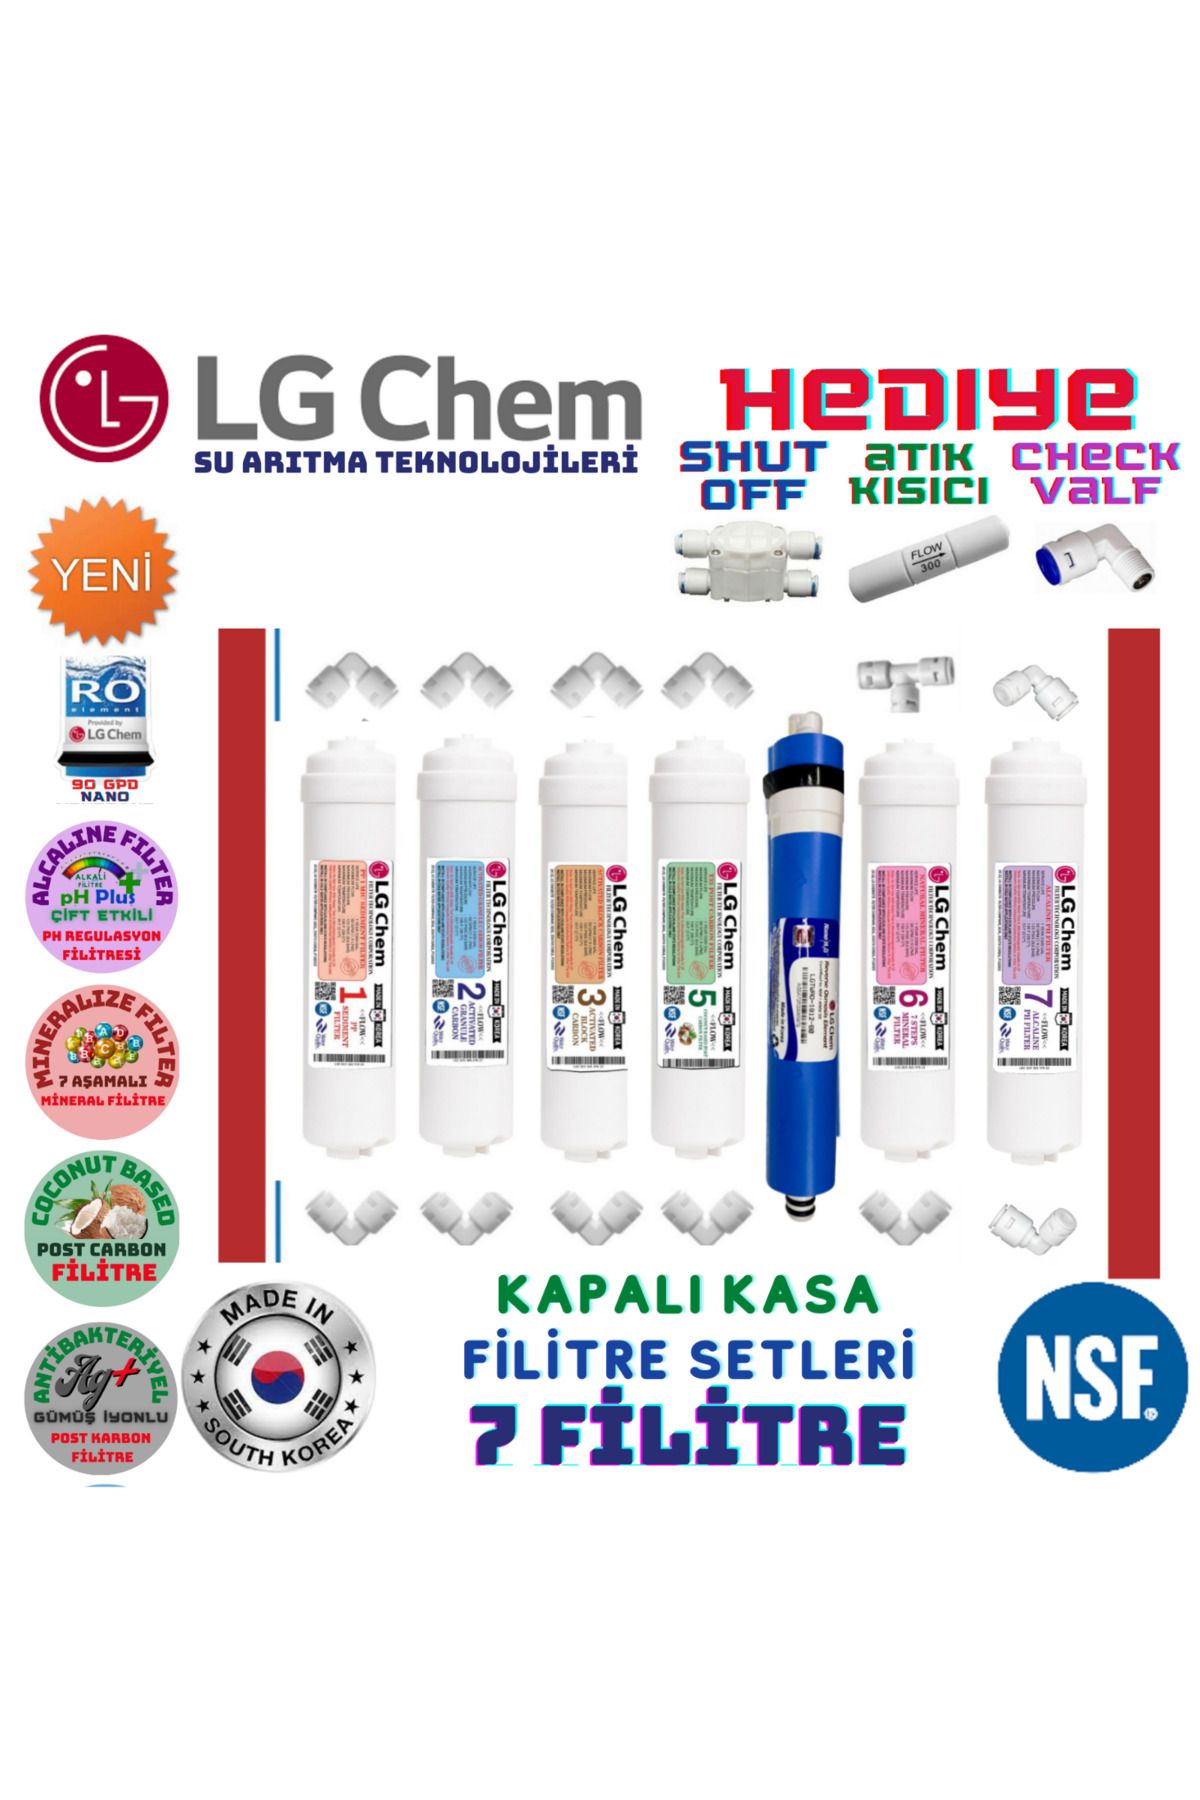 LG Chem Kapalı Kasa 7 Filitre 14 Aşama Inline Filitre Seti.tüm Fittingler Hediye.